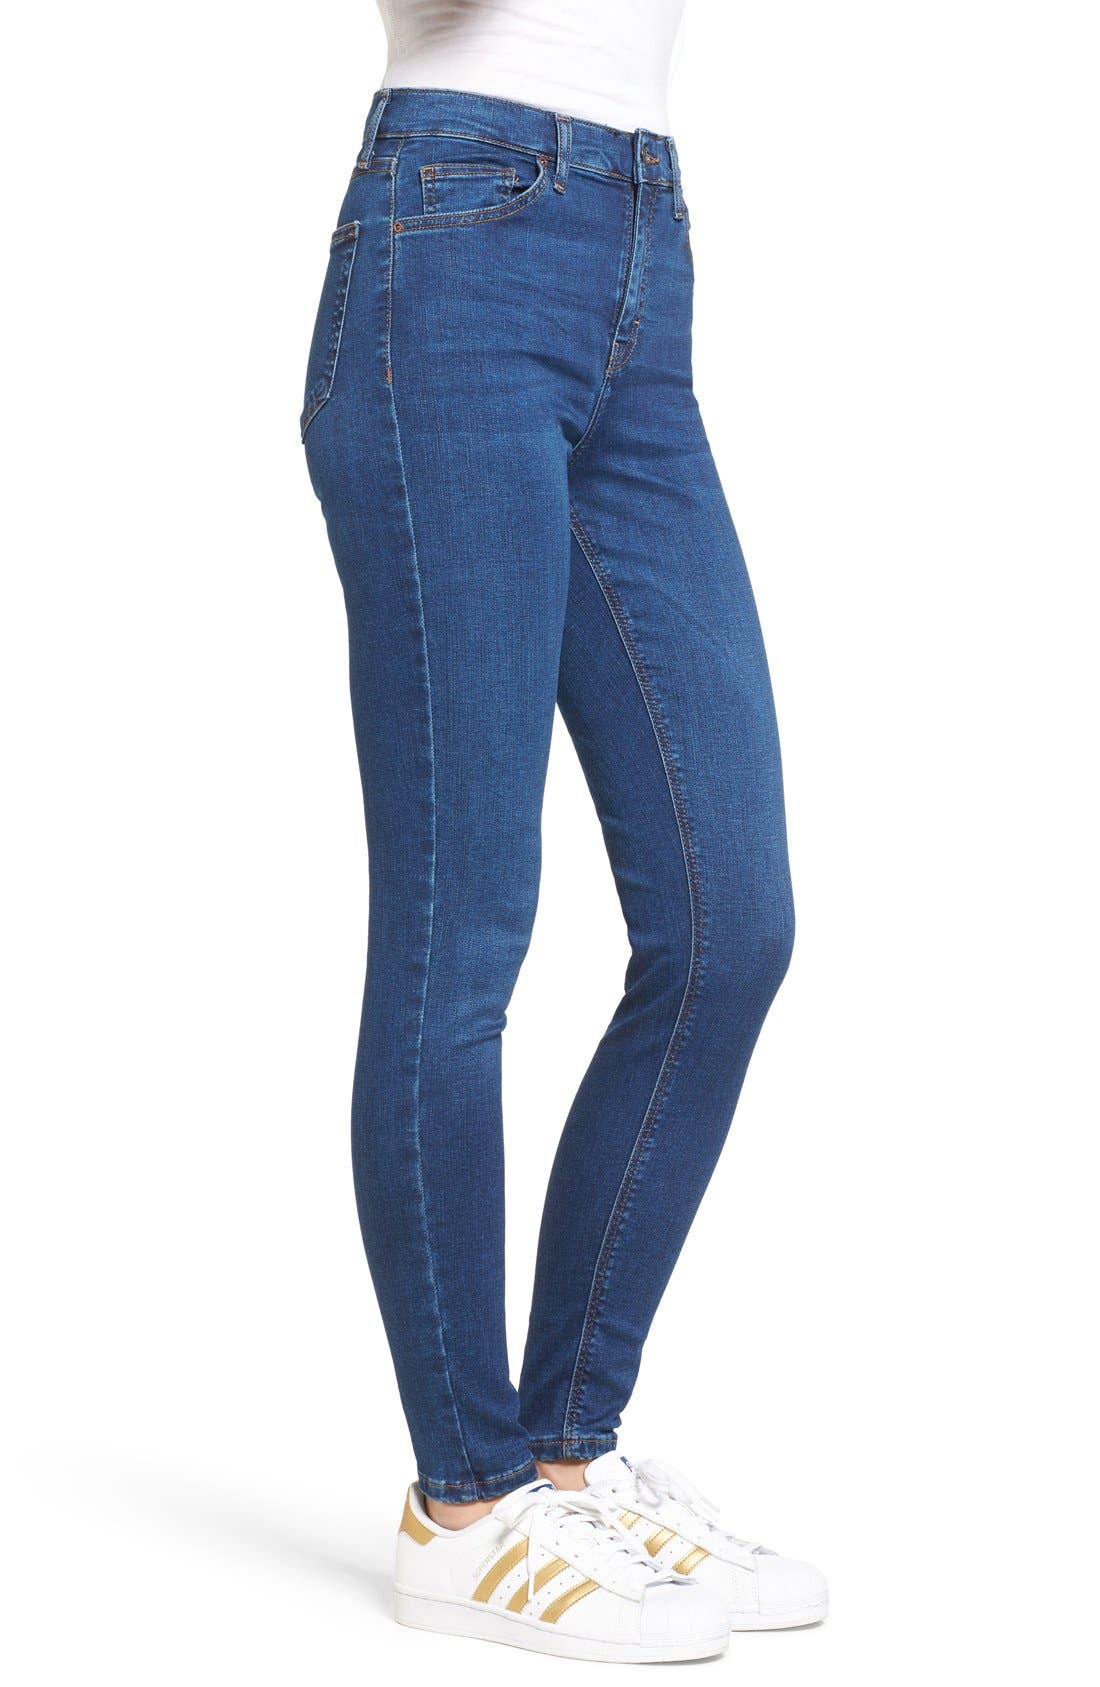 Pacsun Womens Jeans Size Chart